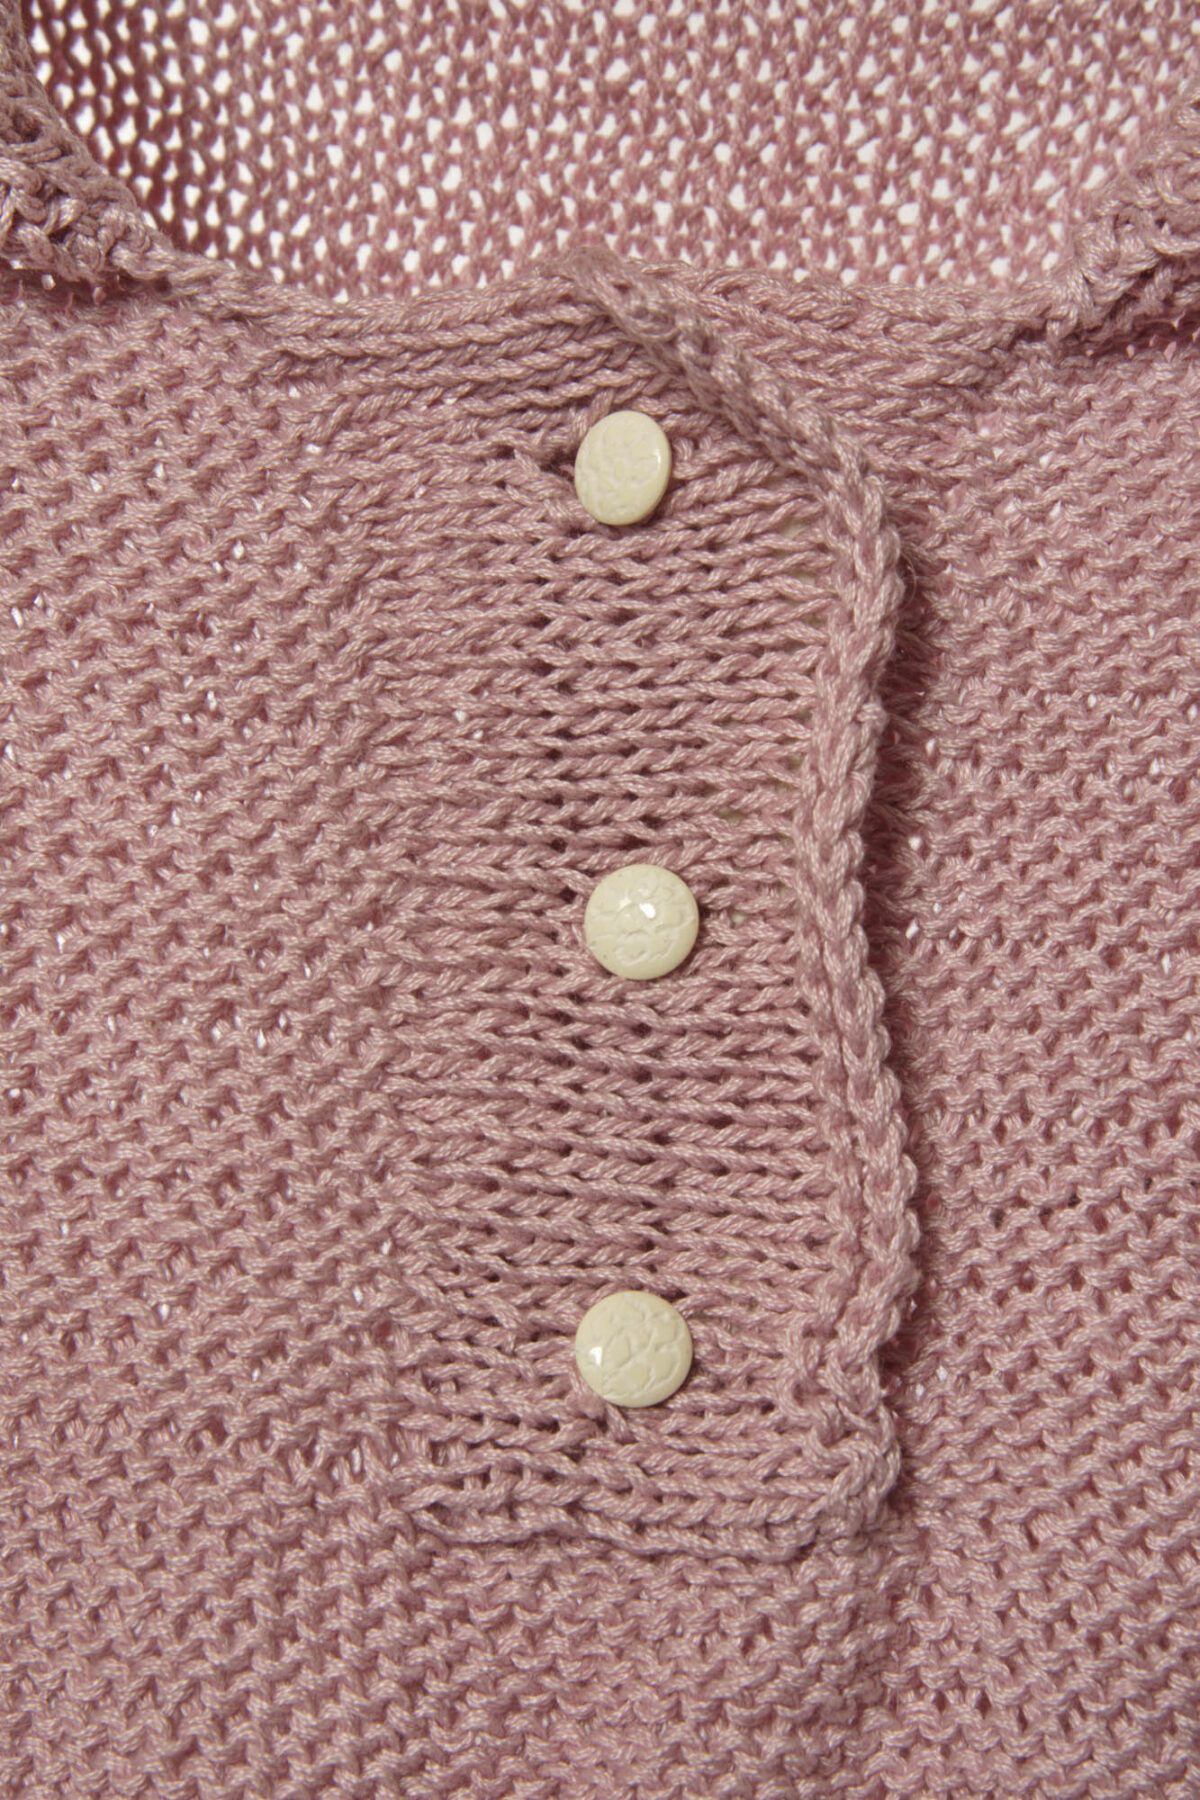 Jersey knit Collar Polo shirt 3 button placket closure